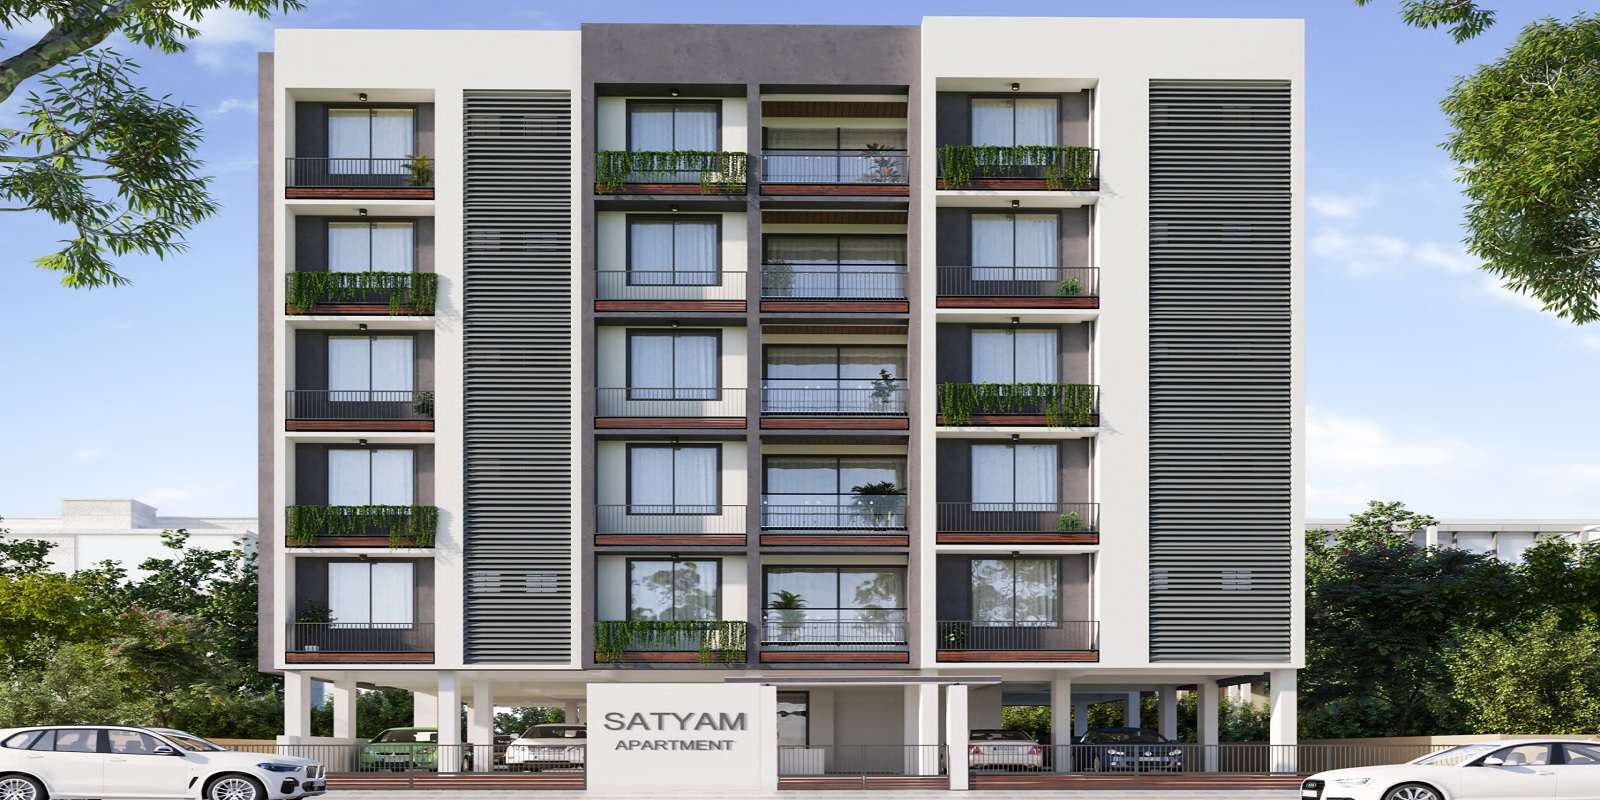 Aarinston Satyam Apartment Cover Image